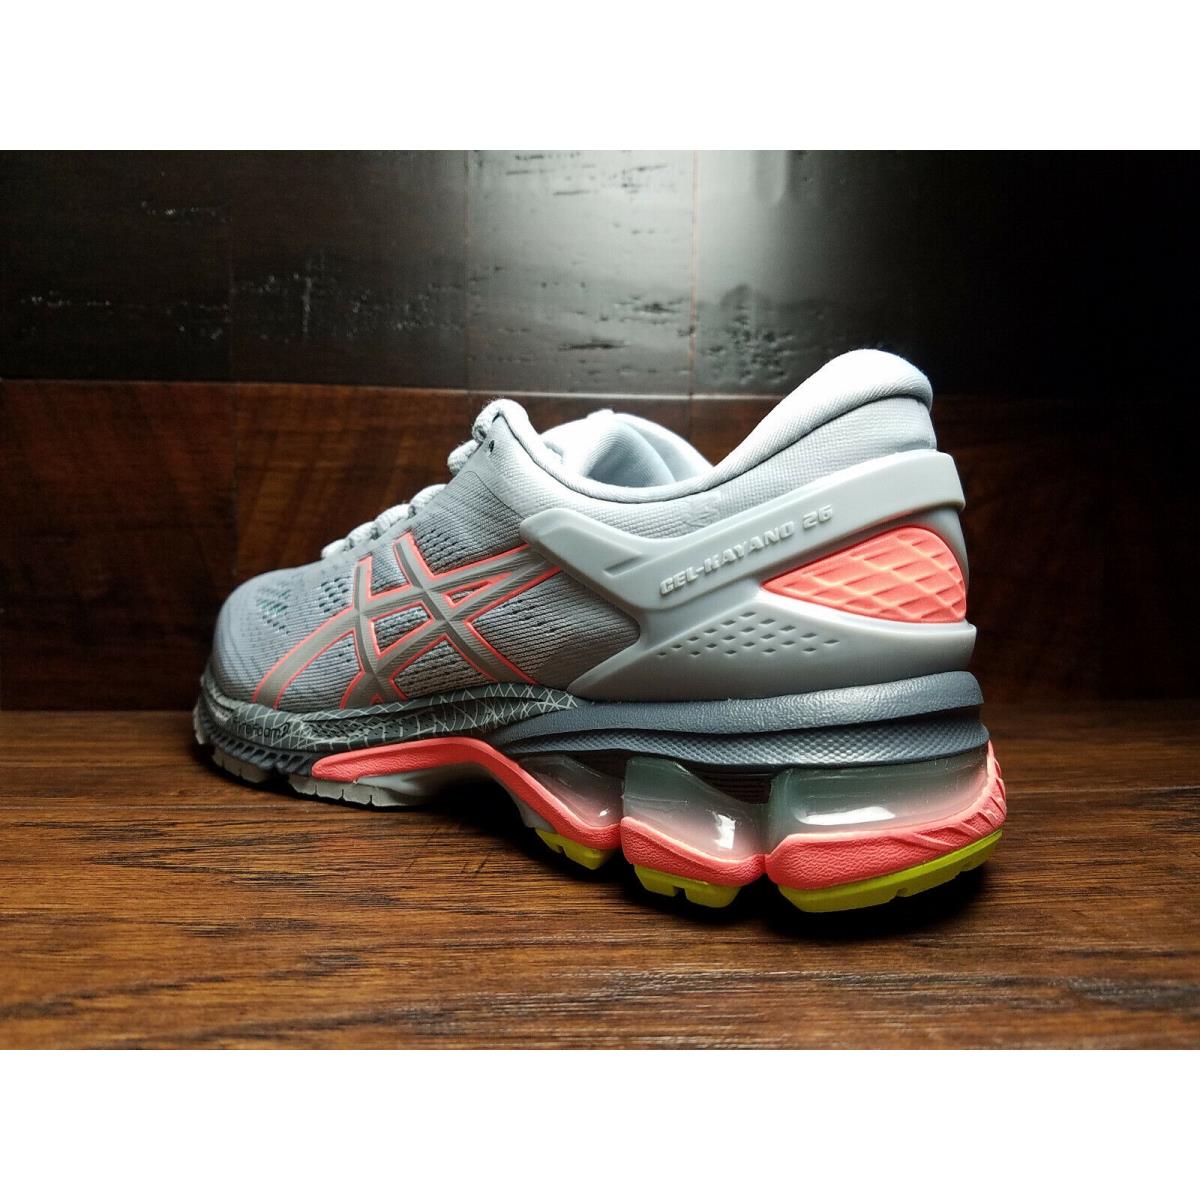 ASICS shoes  - Piedmont Grey / Coral 2